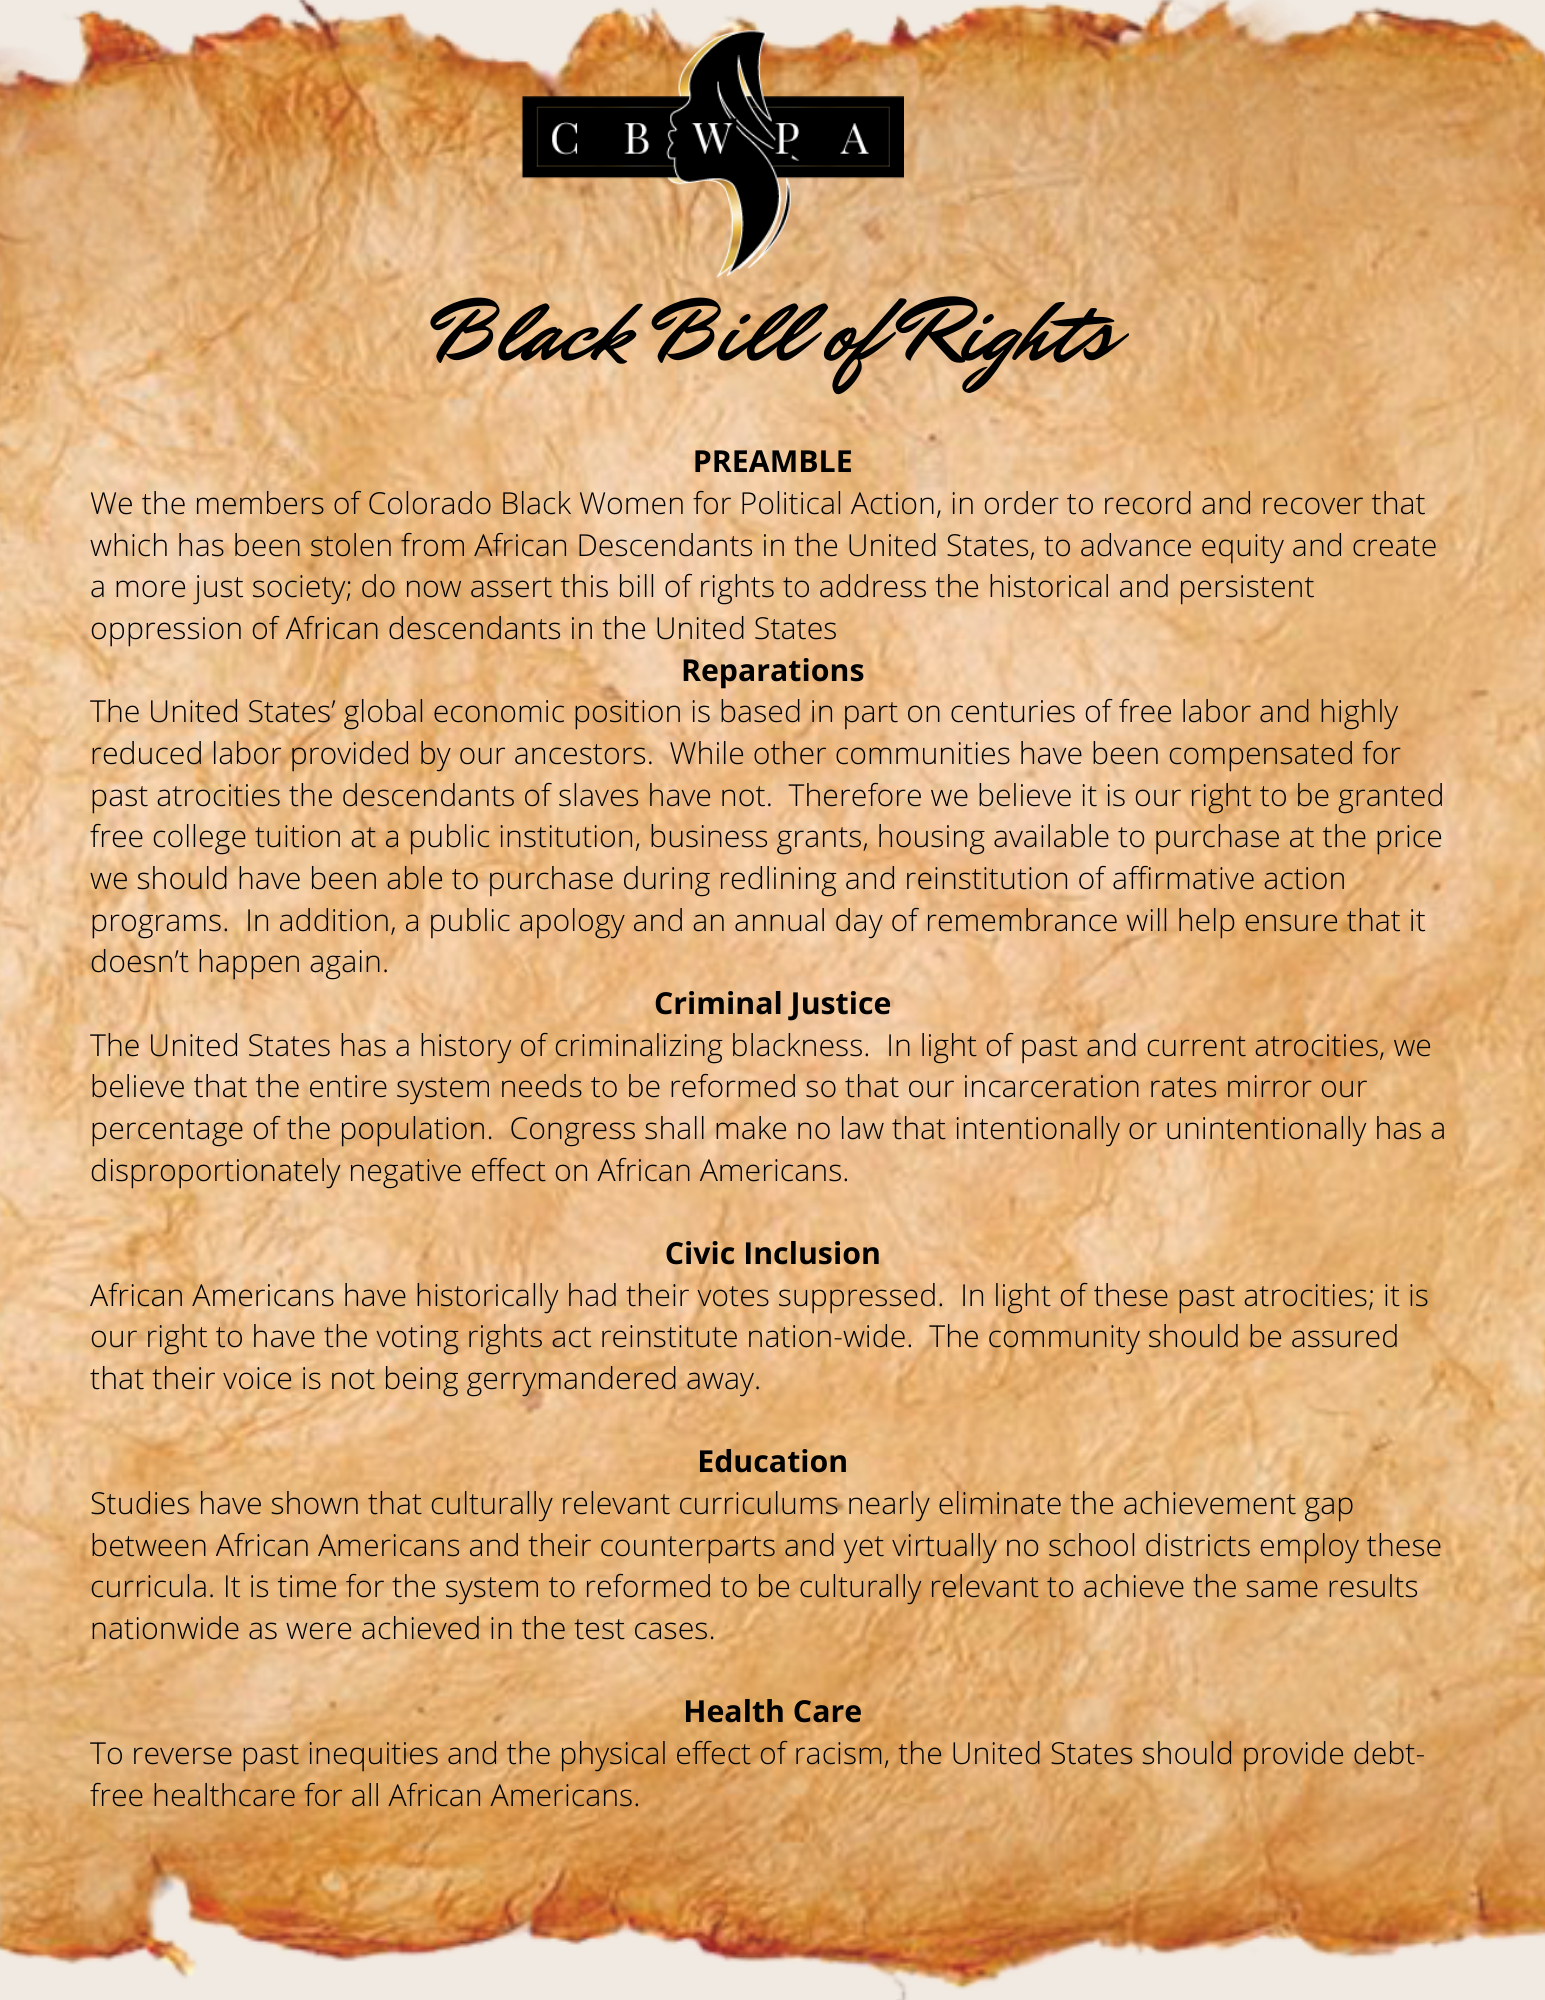 CBWPA's Black Bill of Rights